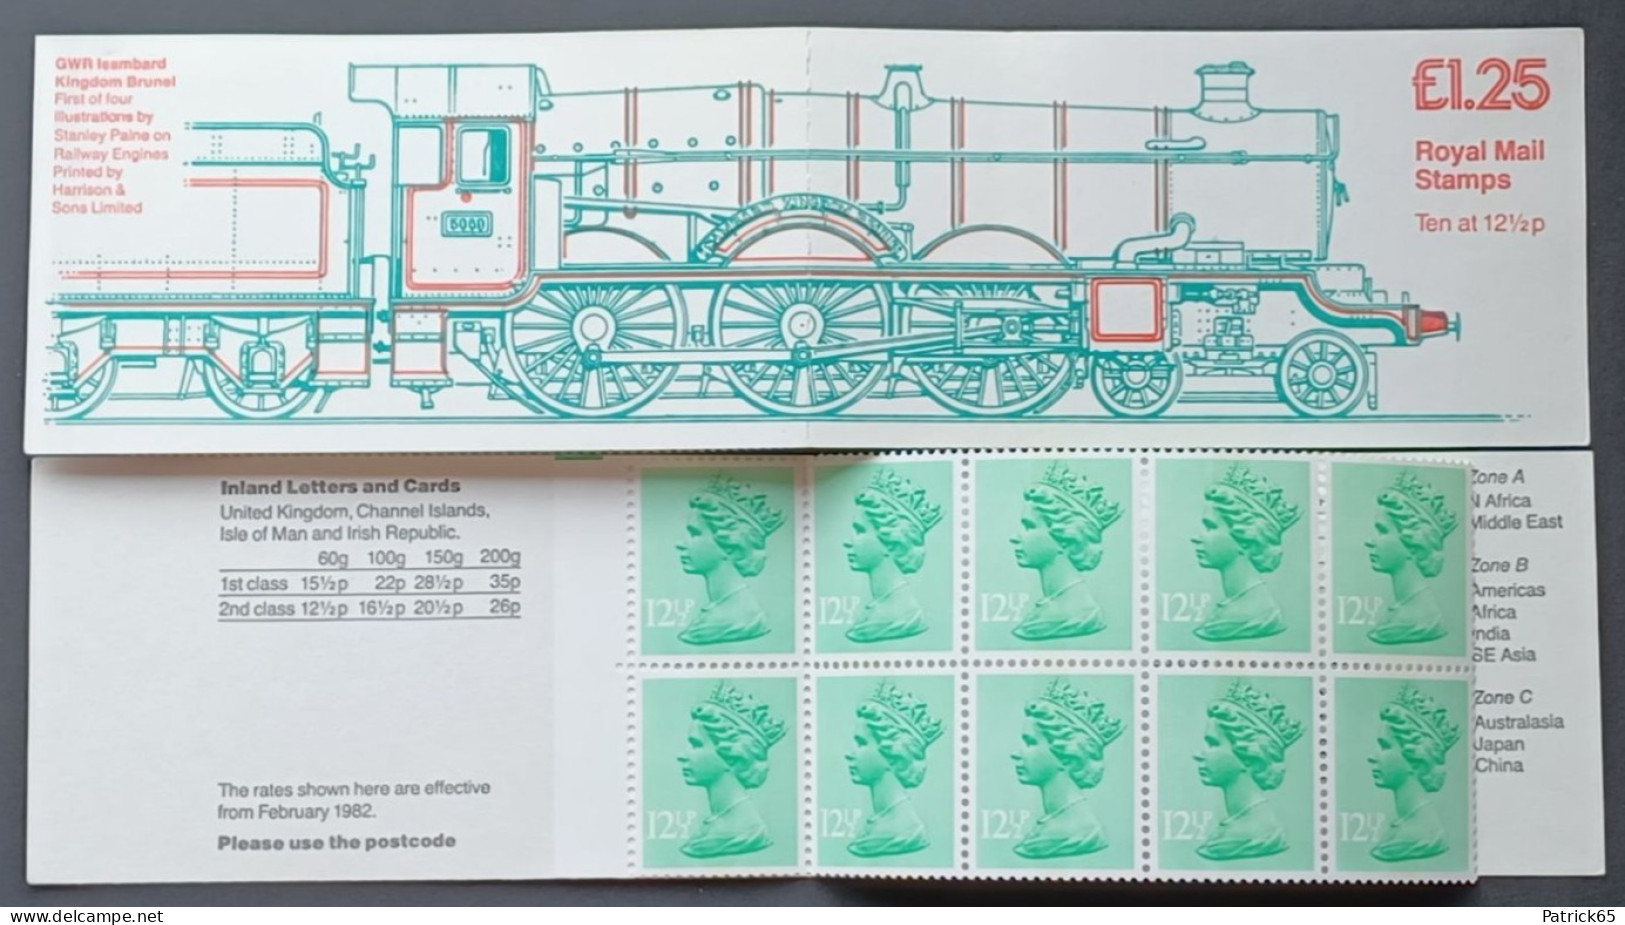 Groot Brittannie 1983 Sg.FK5B - MNH Compleet Boekje GWR Isambard Kingdom Brunei 1/4 - Cuadernillos